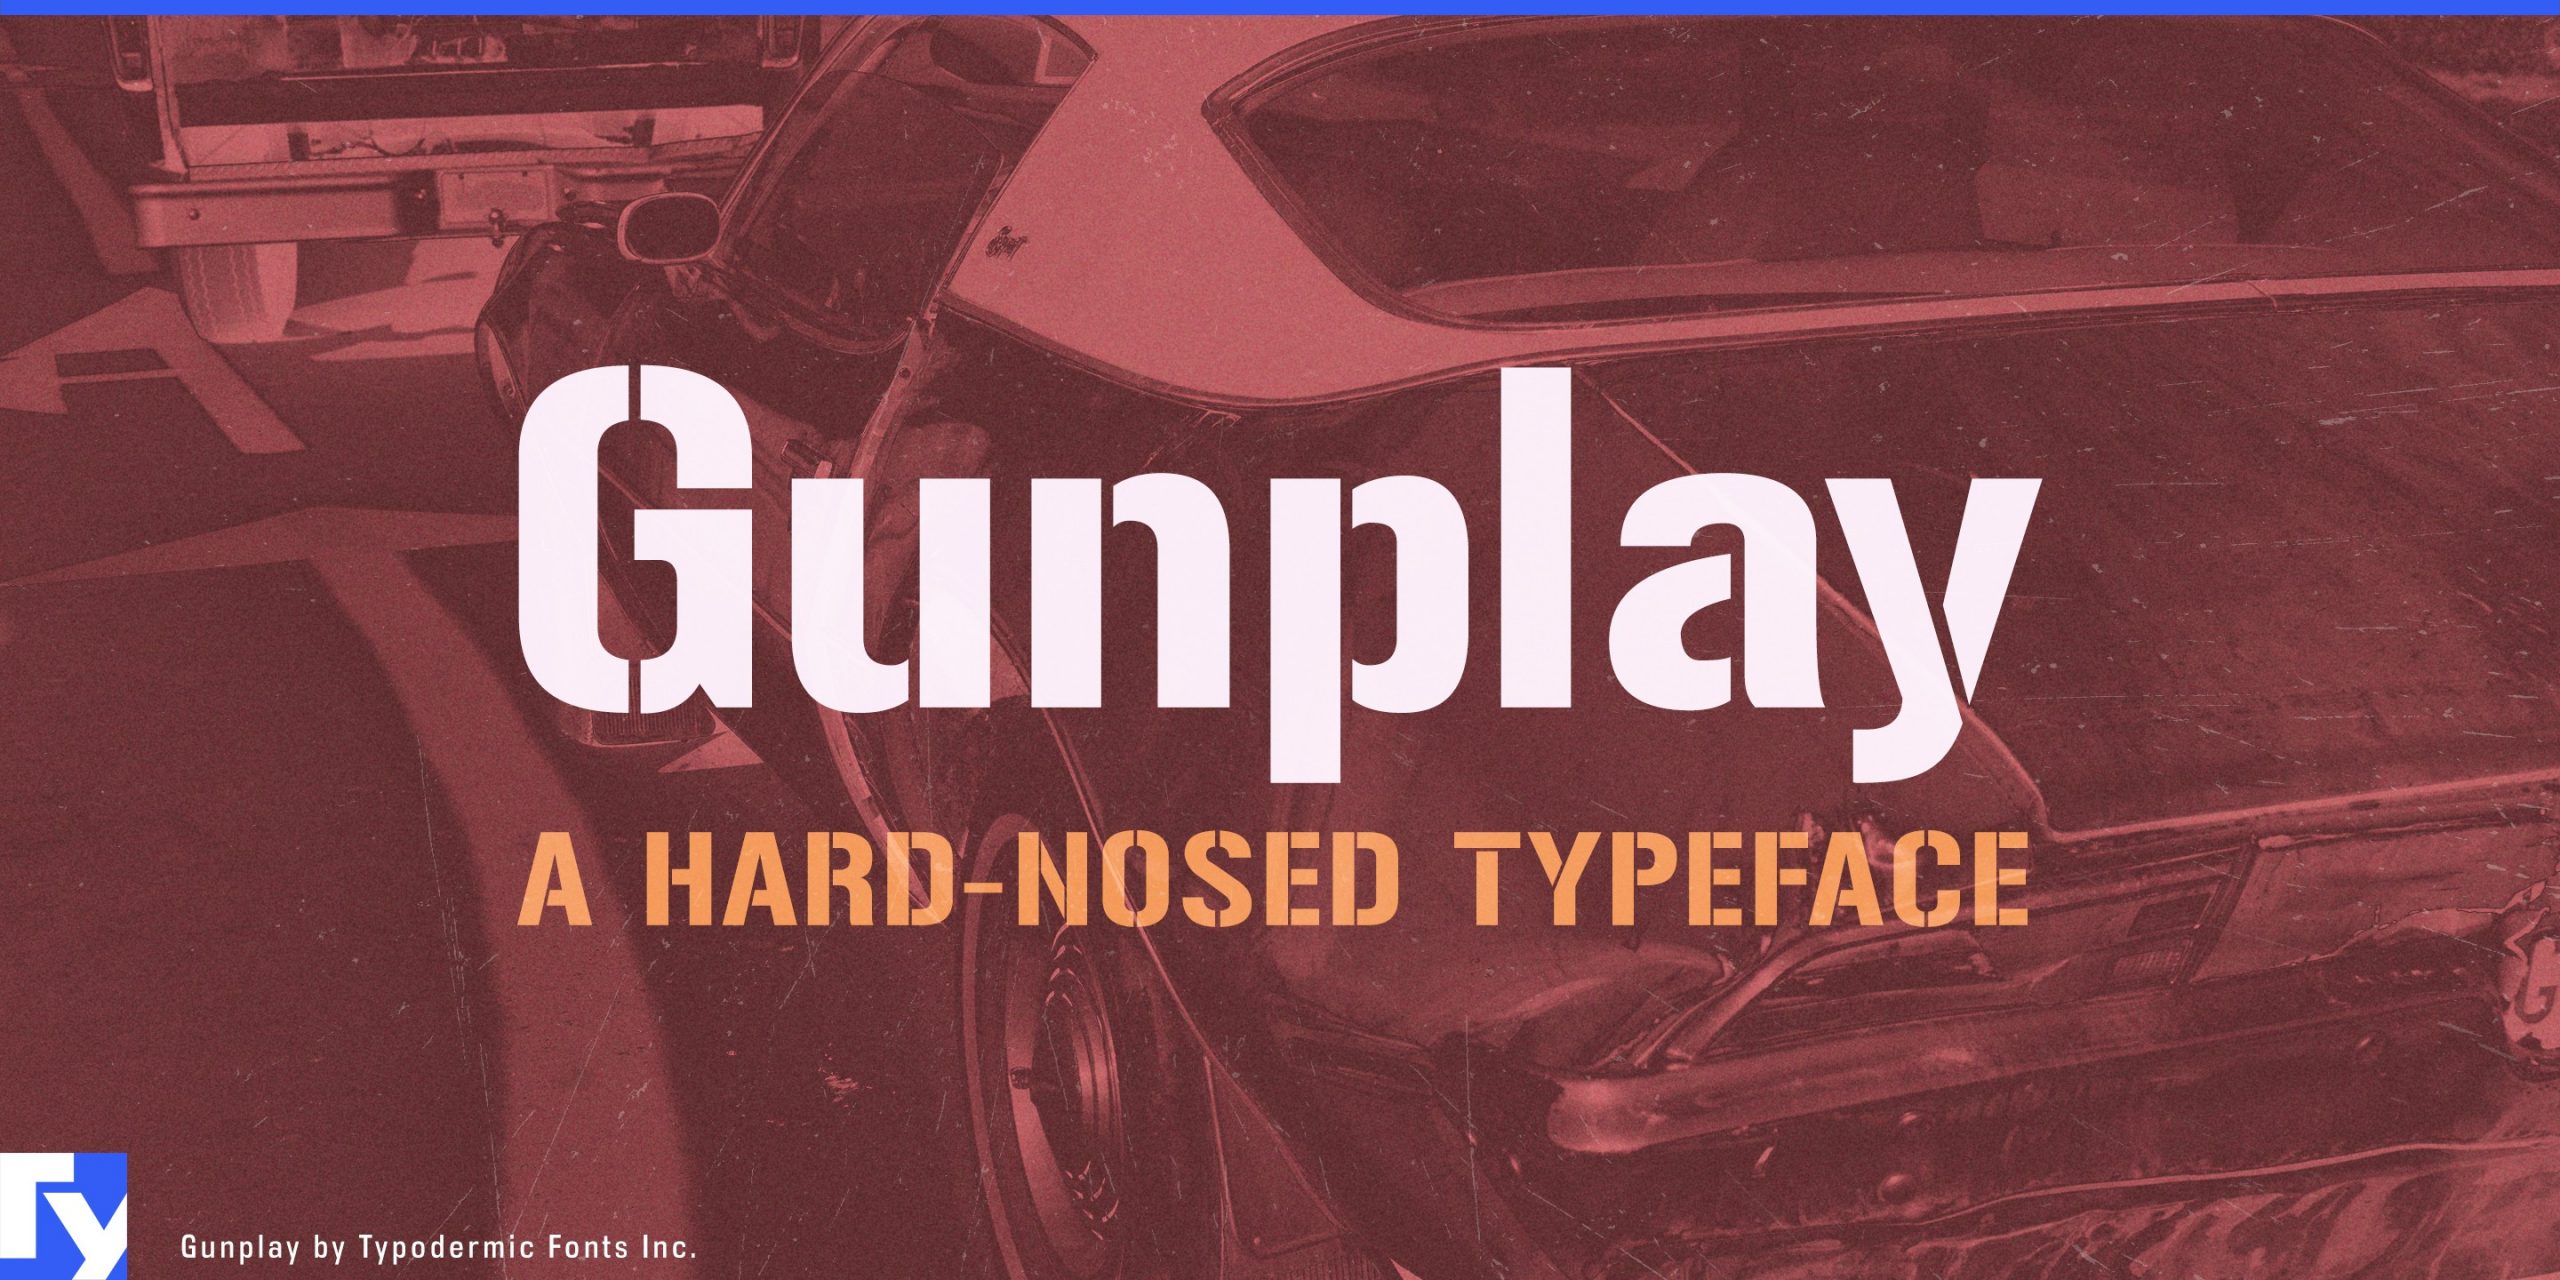 Rugged and Tenacious: Gunplay Typeface Makes a Bold Statement